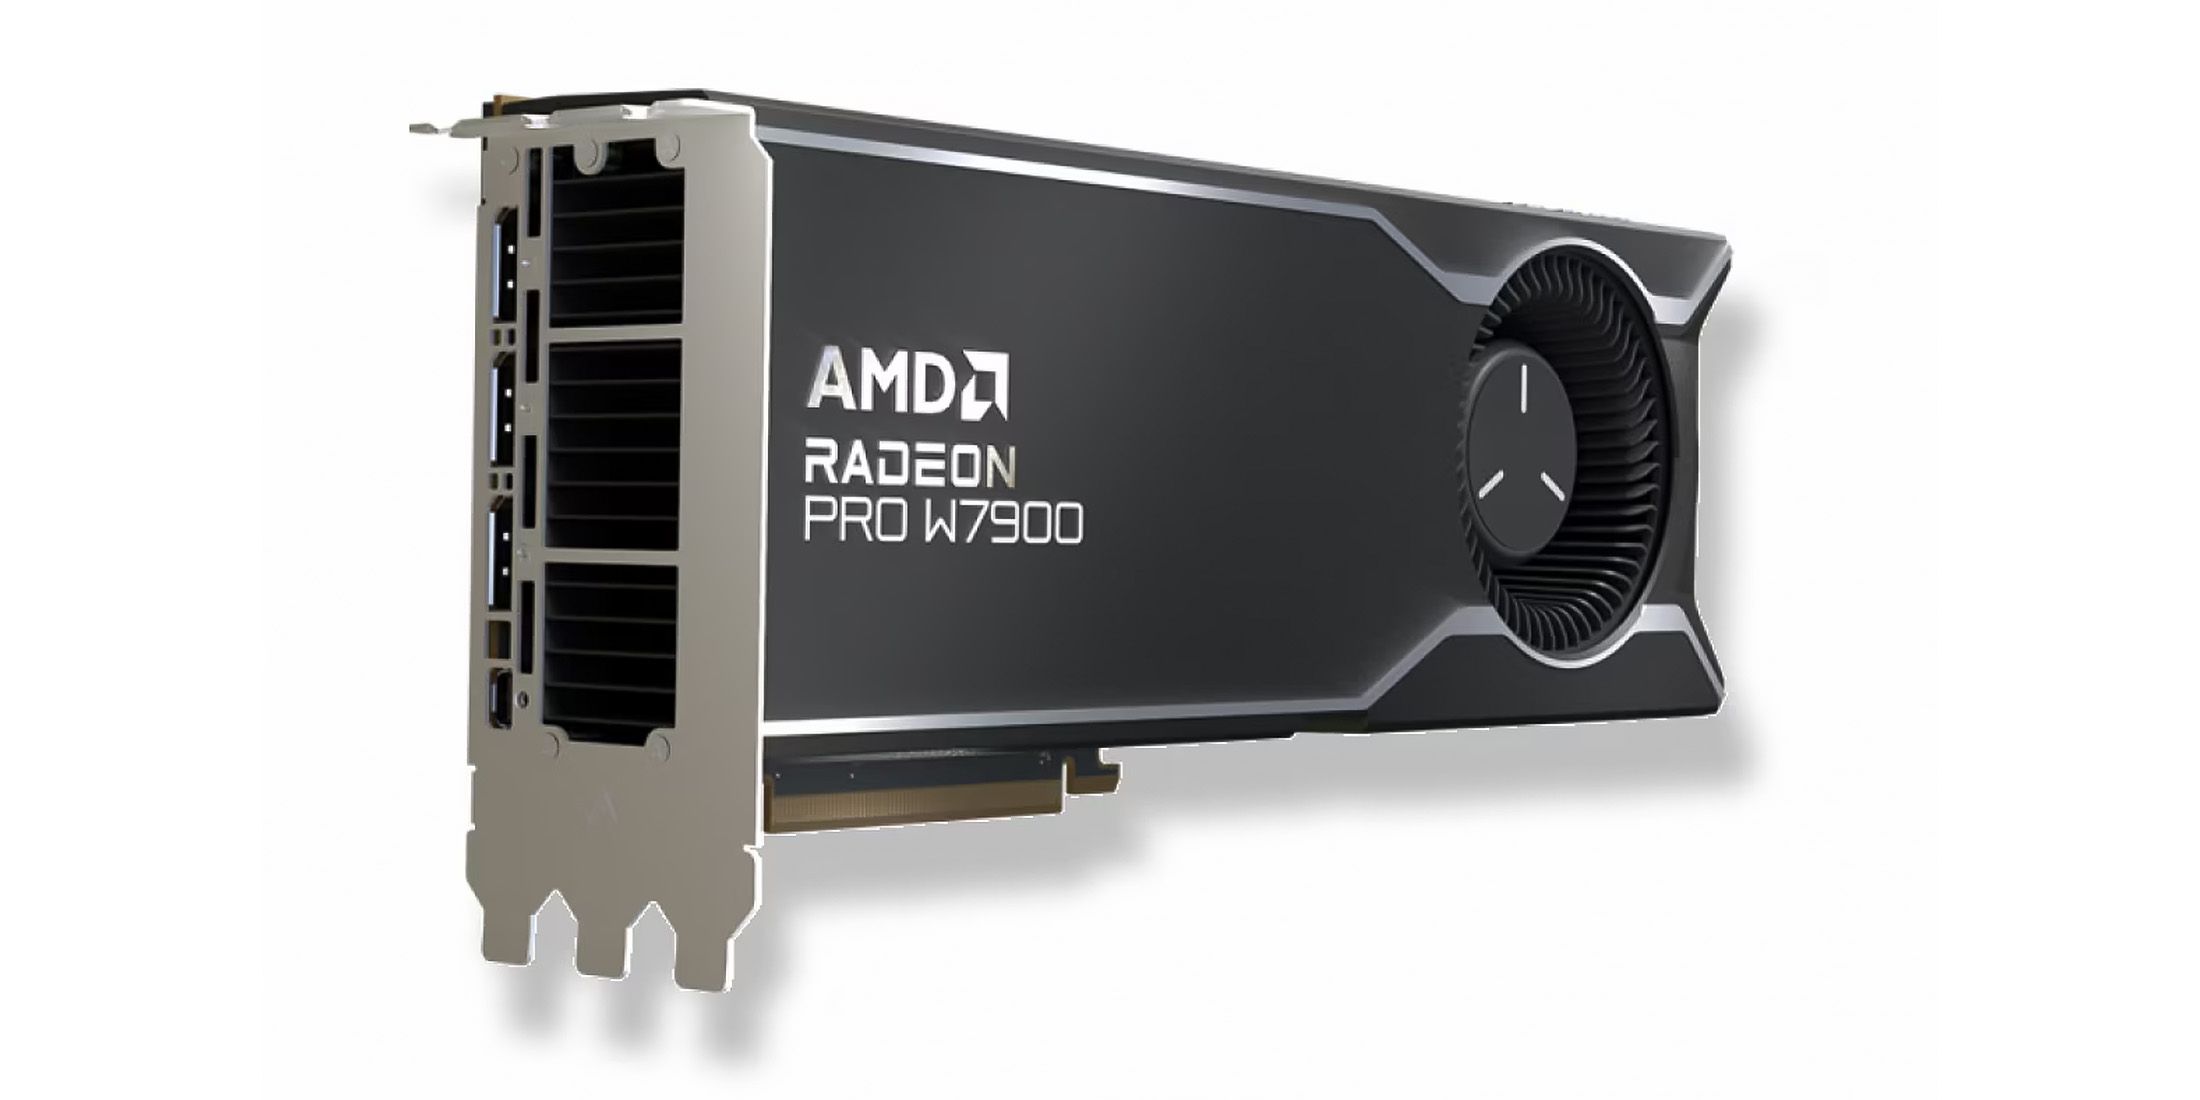 AMD Radeon PRO W7900 GPU on white background